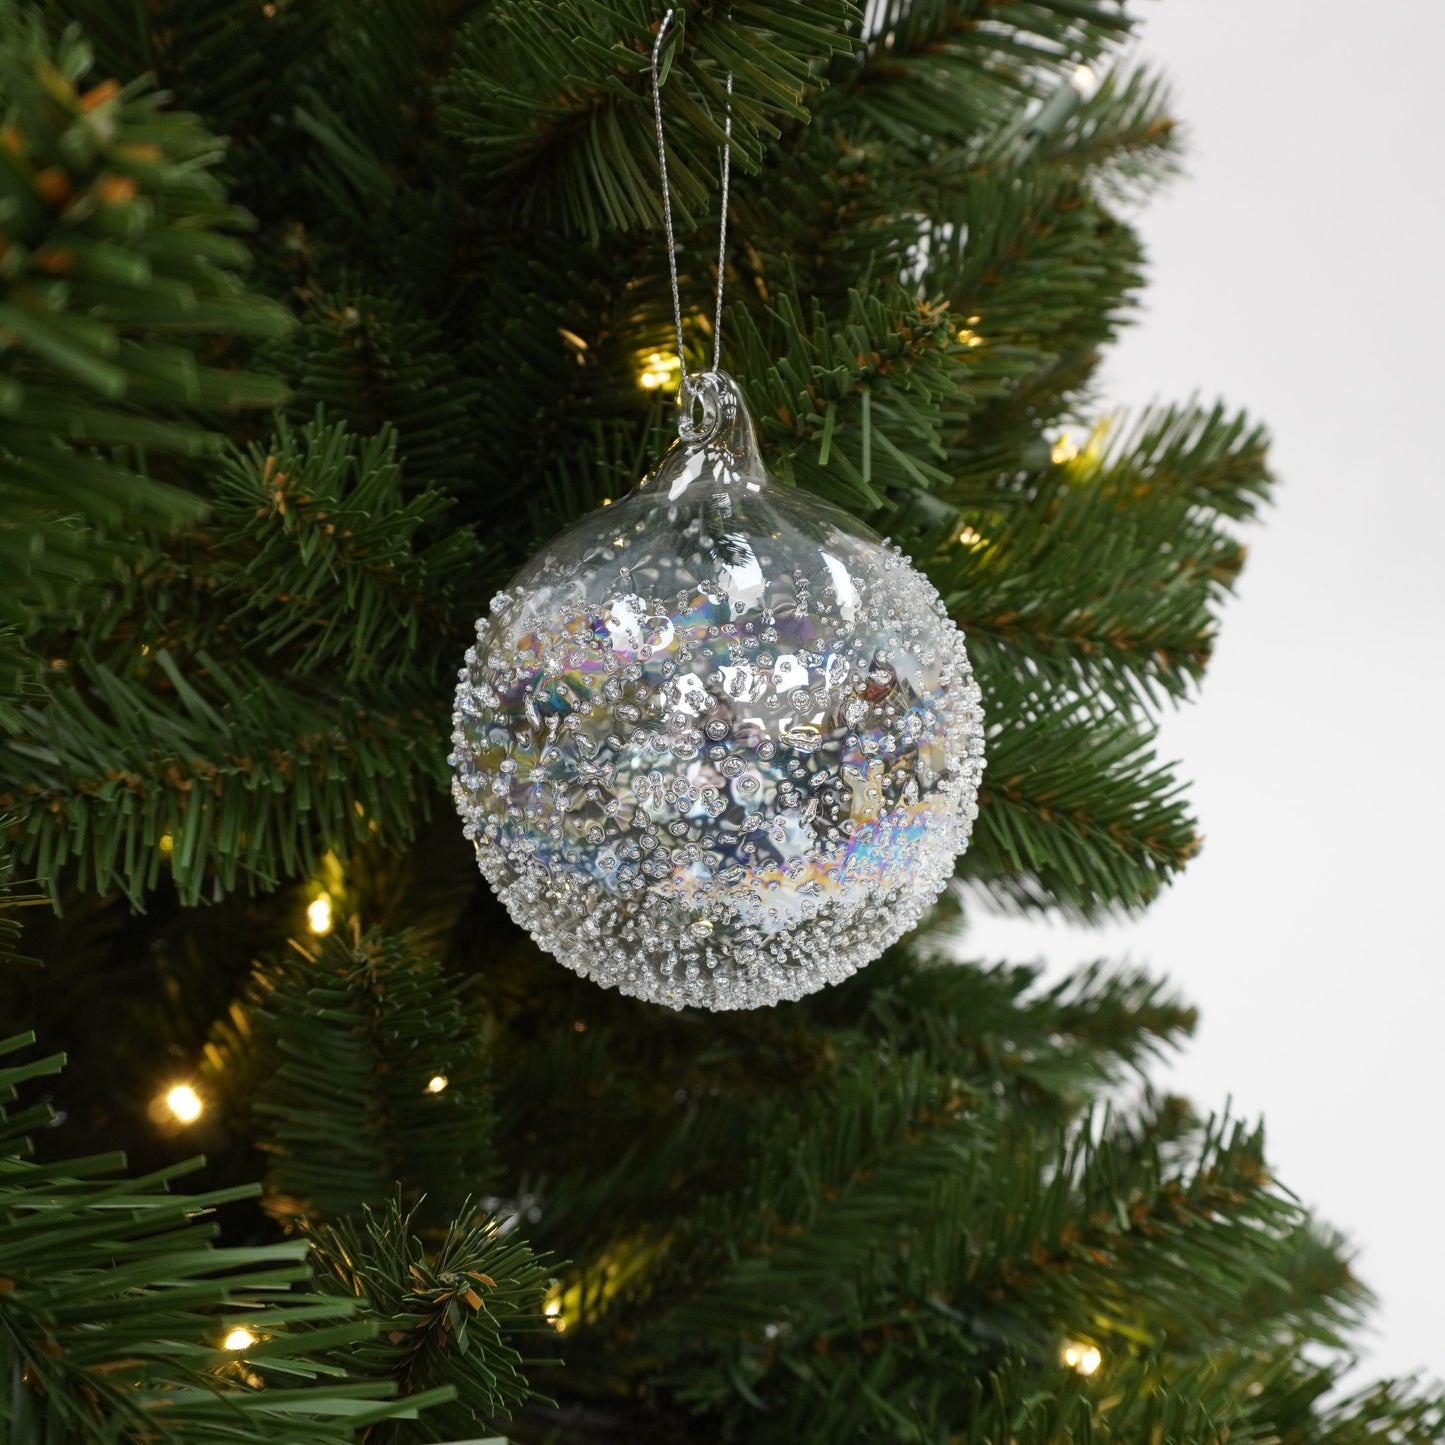 4" Glistening Glass Ball Ornaments